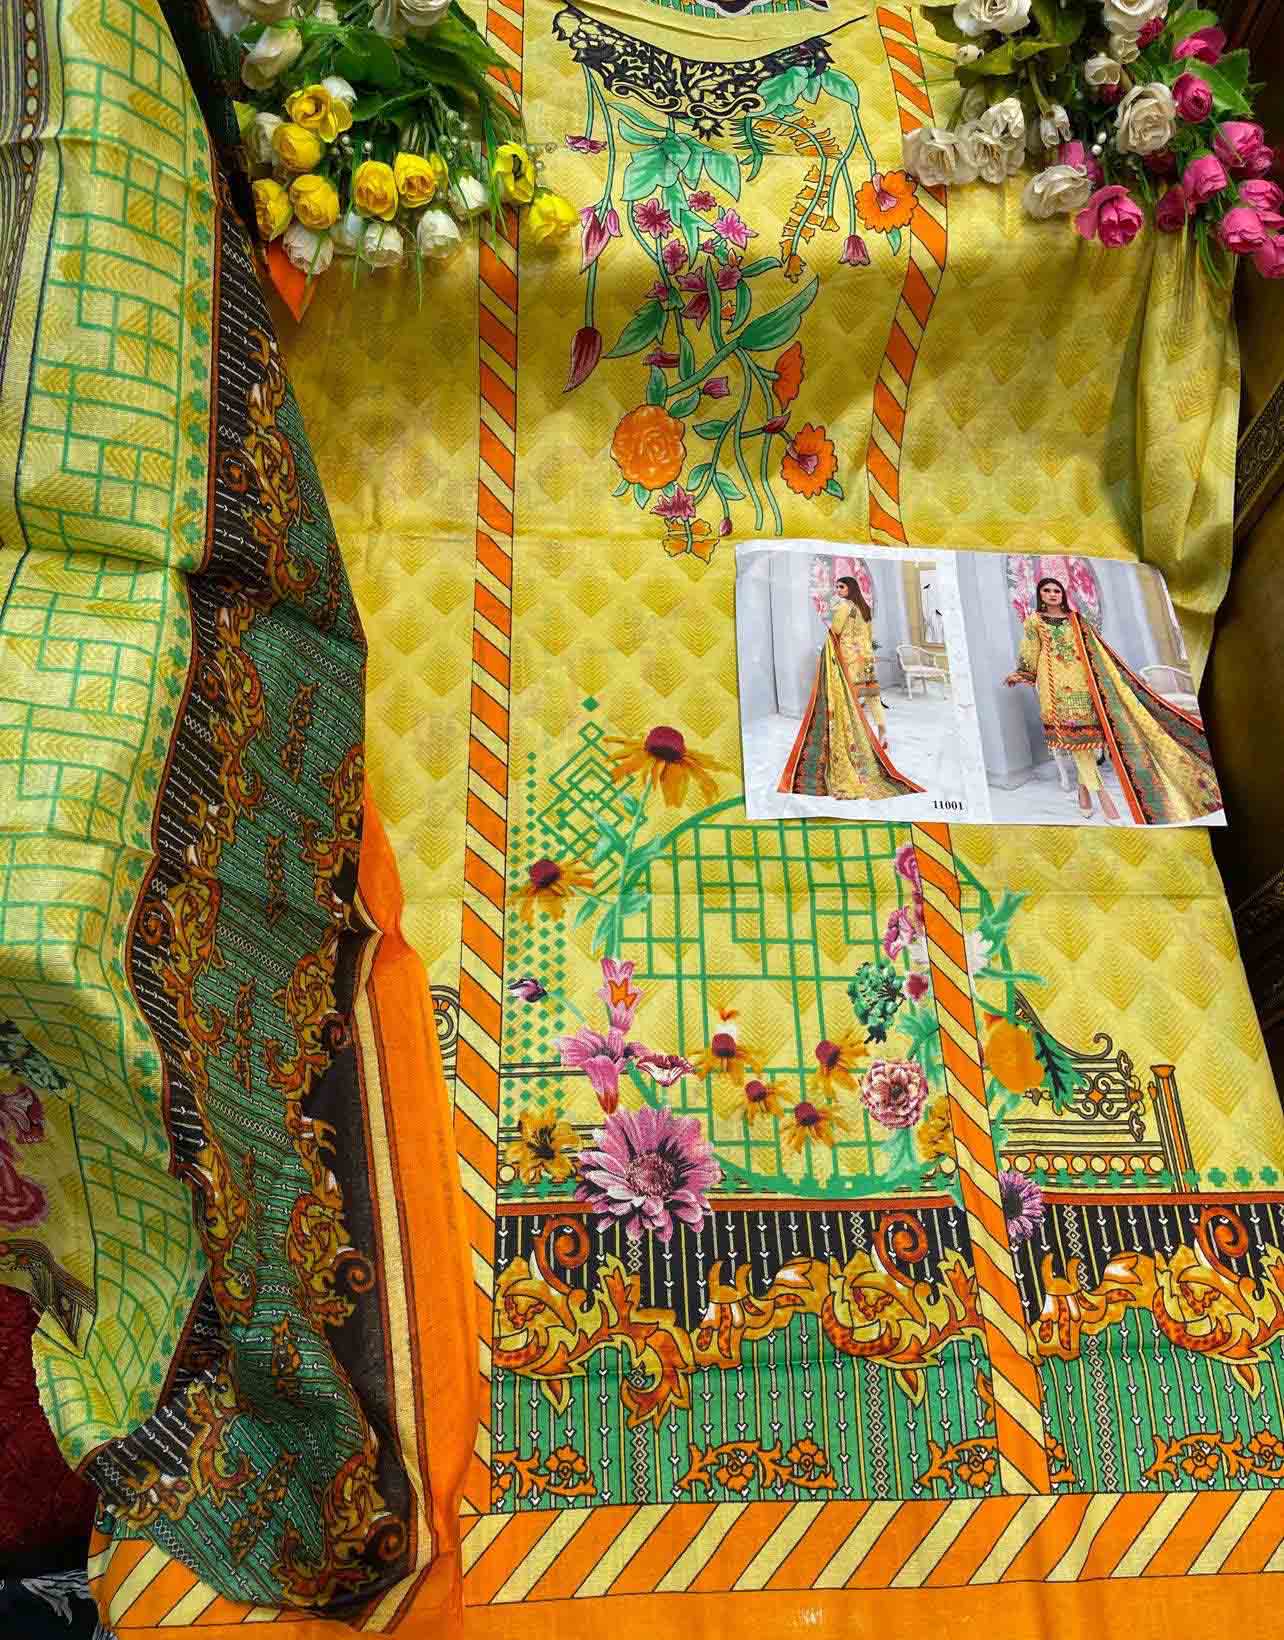 Unstitched Cotton Yellow Salwar Suit Pakistani Dress Material - Stilento